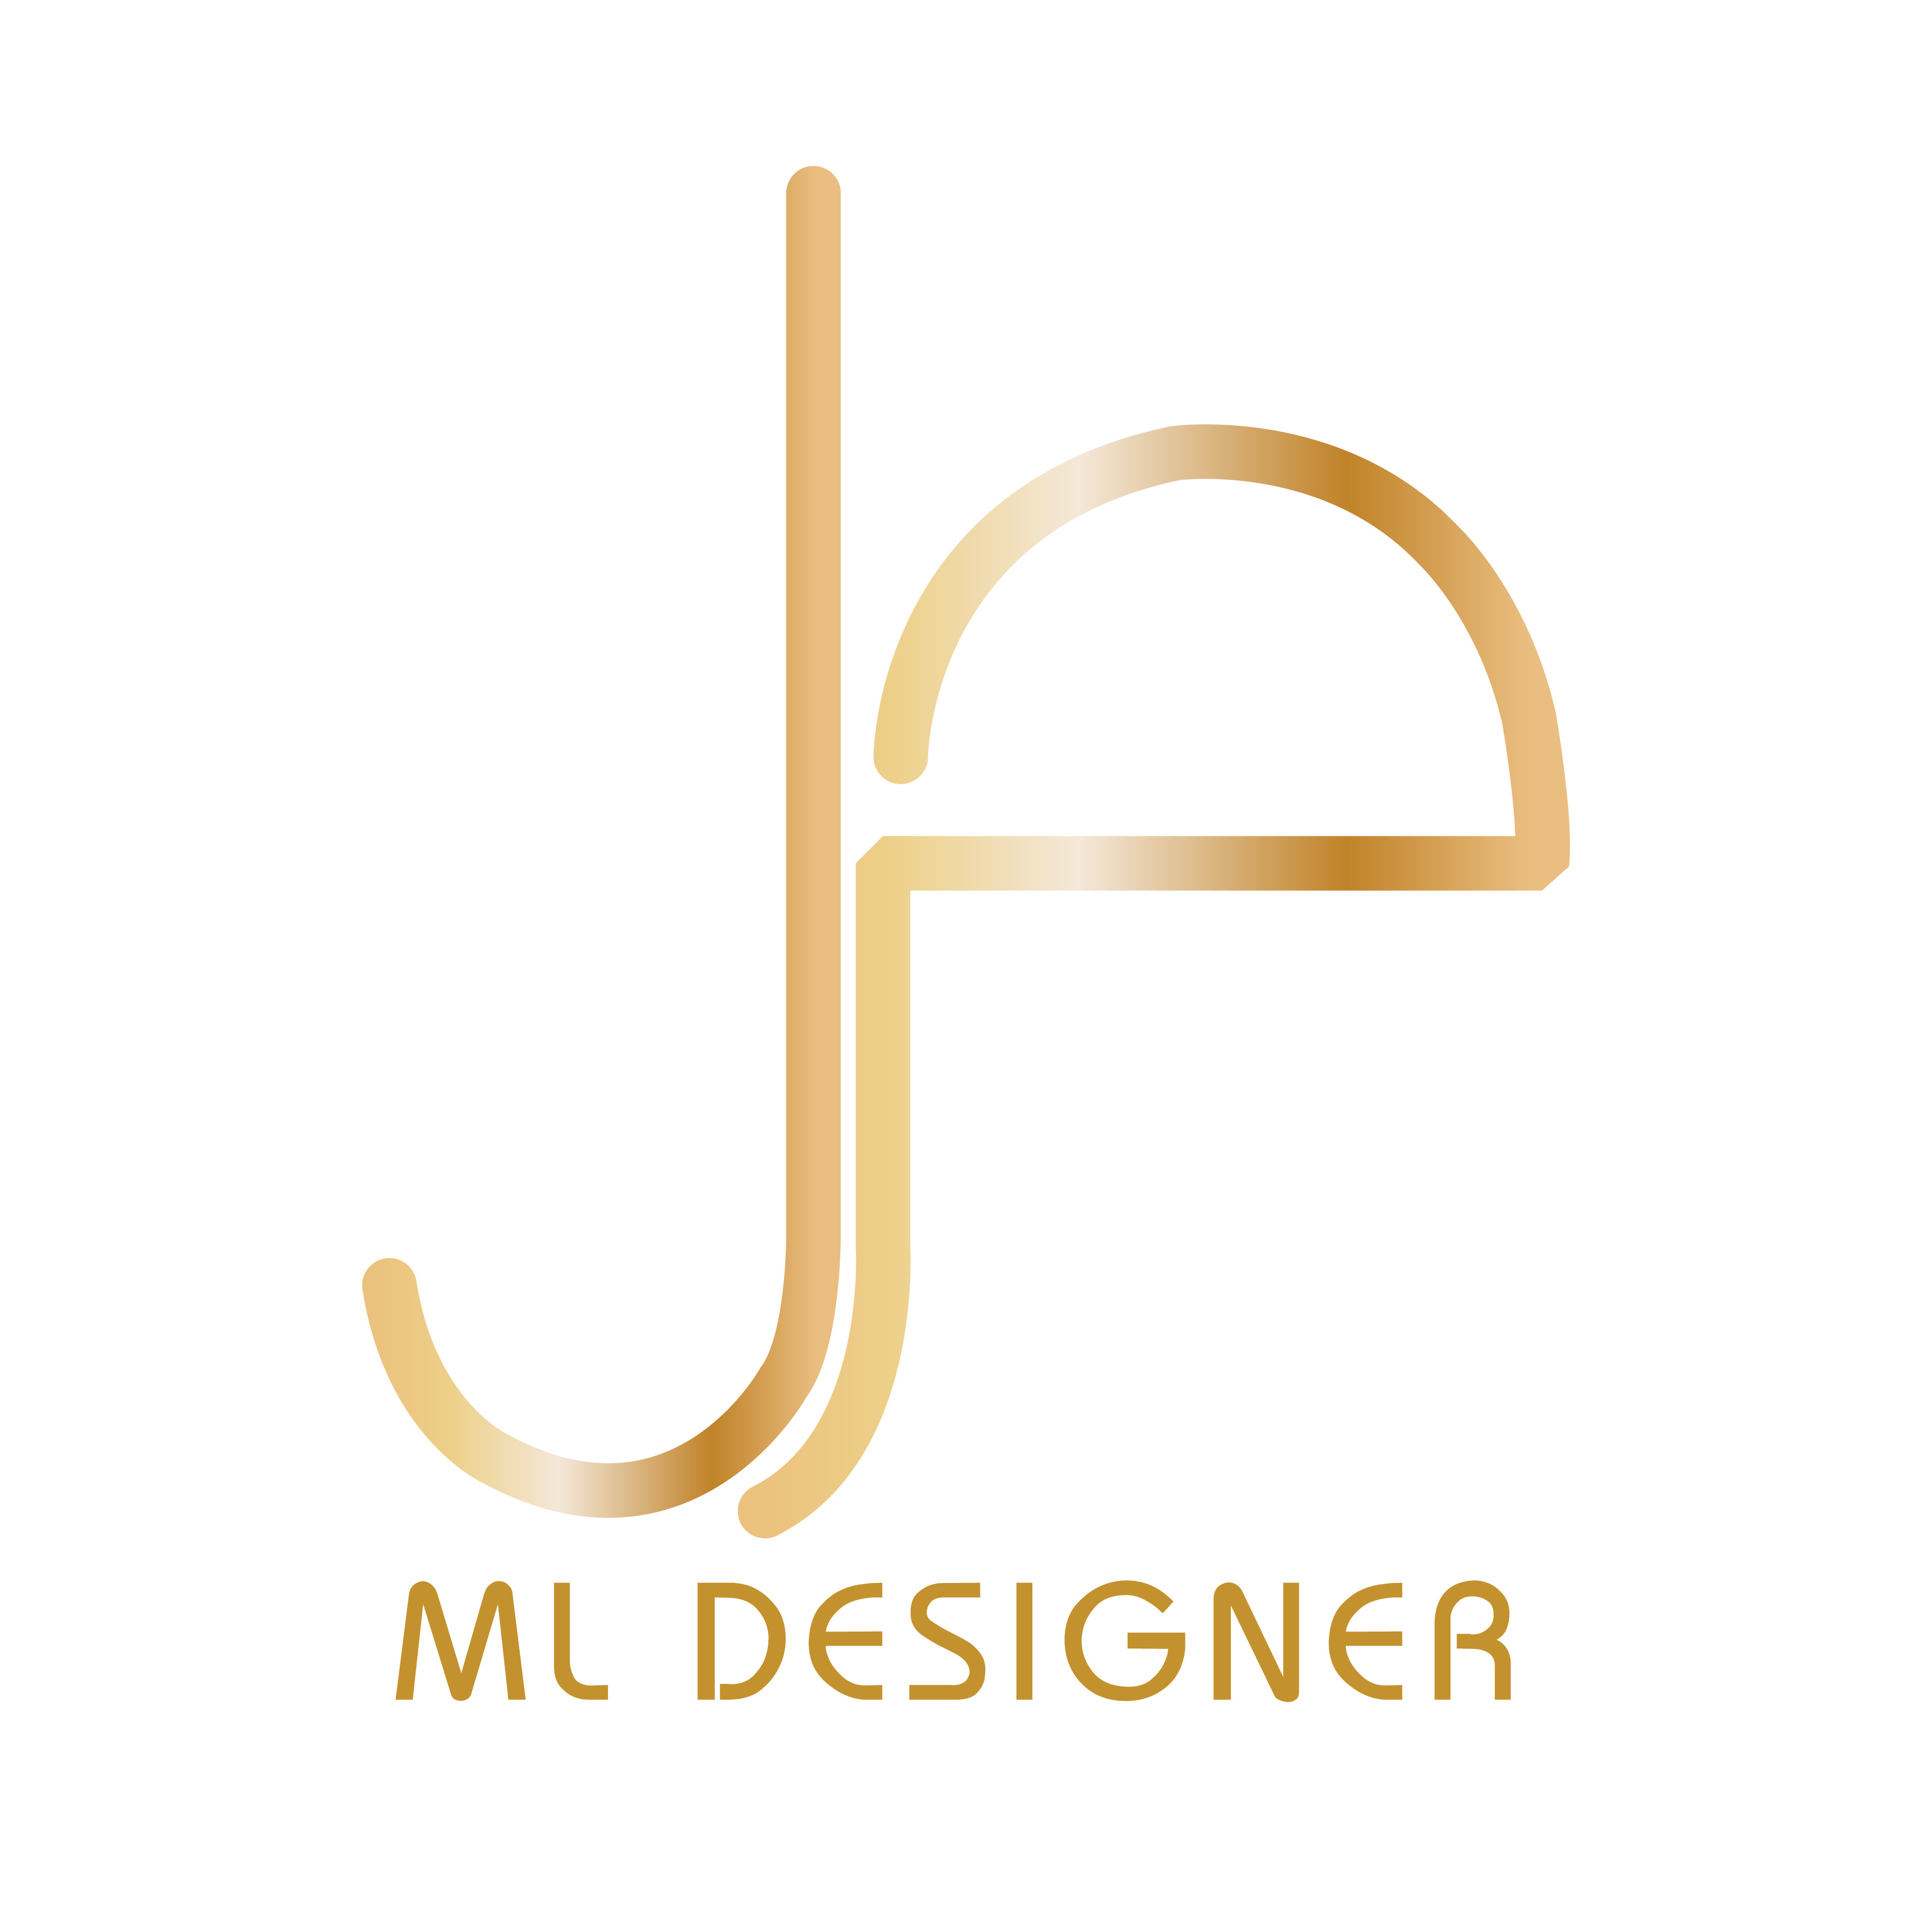 ML designer